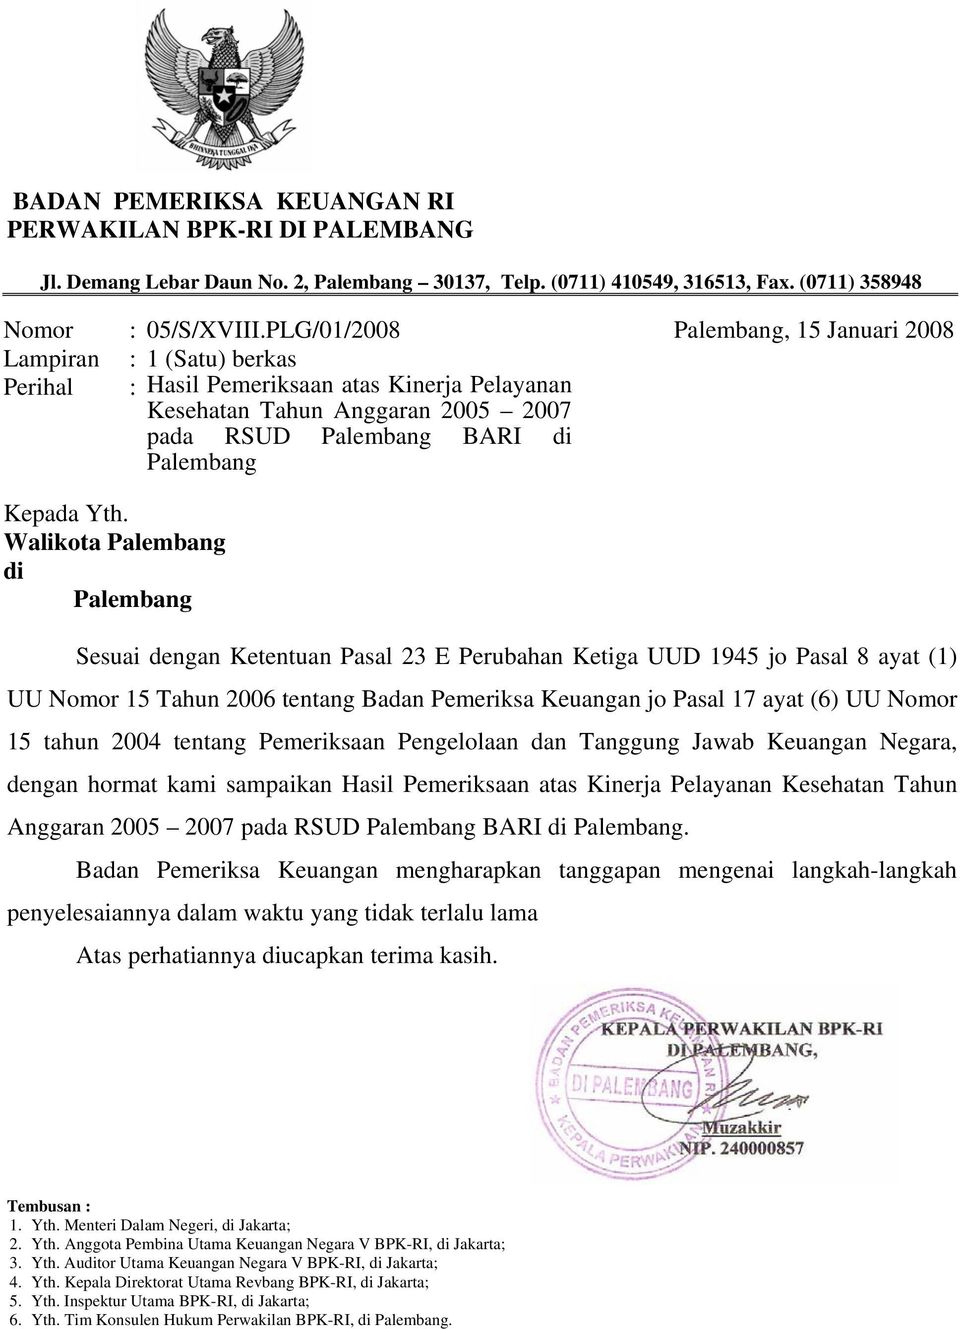 Yth. Walikota Palembang di Palembang Sesuai dengan Ketentuan Pasal 23 E Perubahan Ketiga UUD 1945 jo Pasal 8 ayat (1) UU Nomor 15 Tahun 2006 tentang Badan Pemeriksa Keuangan jo Pasal 17 ayat (6) UU